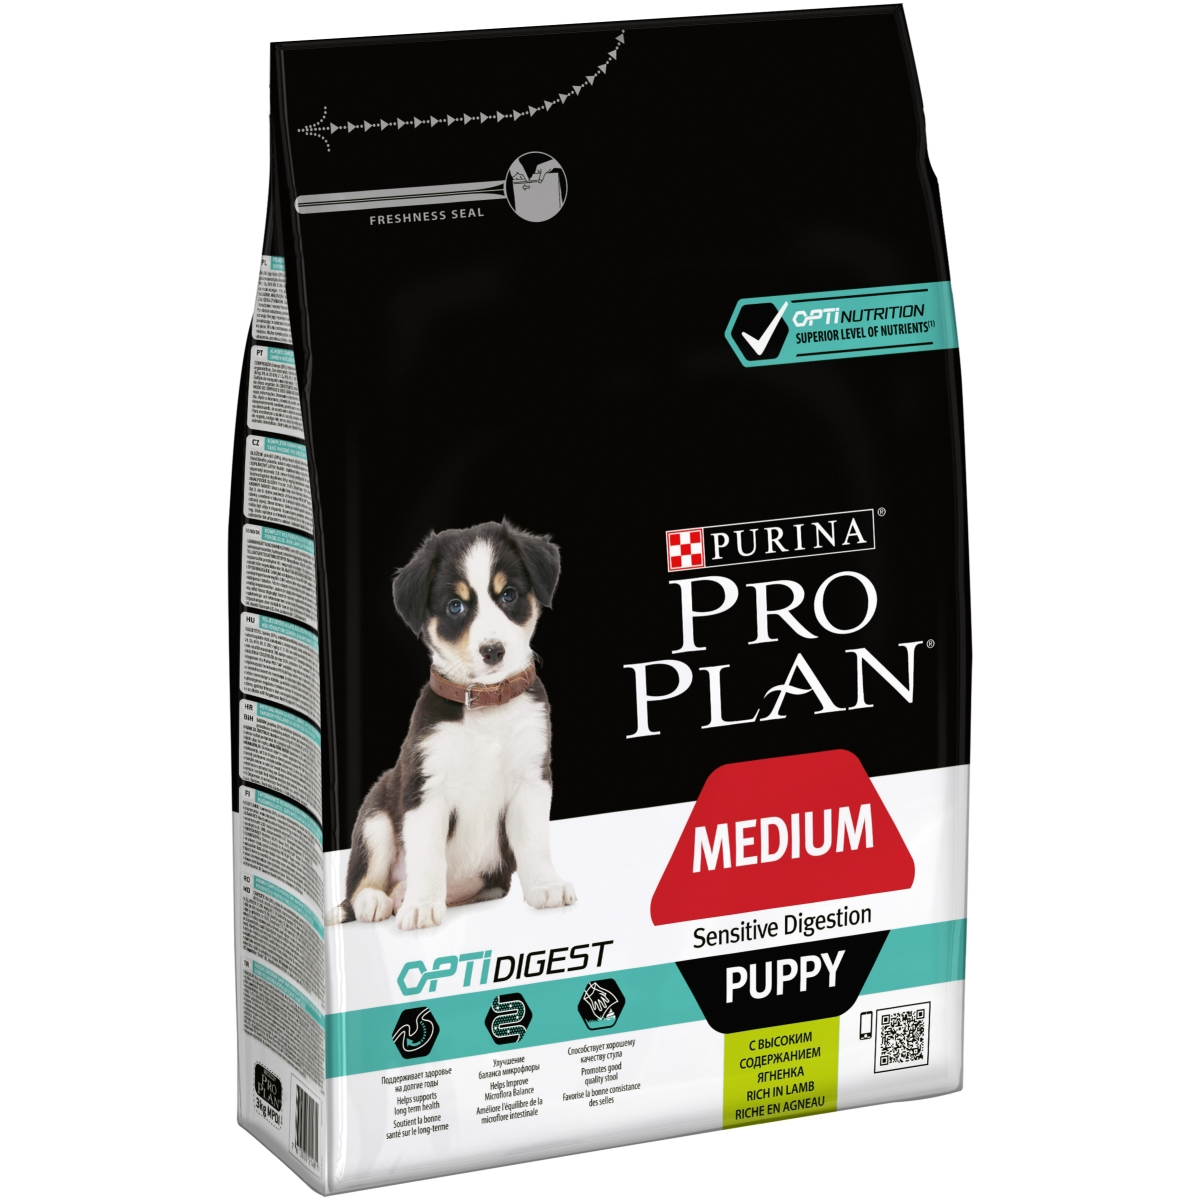 Purina PRO PLAN Medium Puppy Sensitive Digest with OPTIDIGEST®, 3 kg